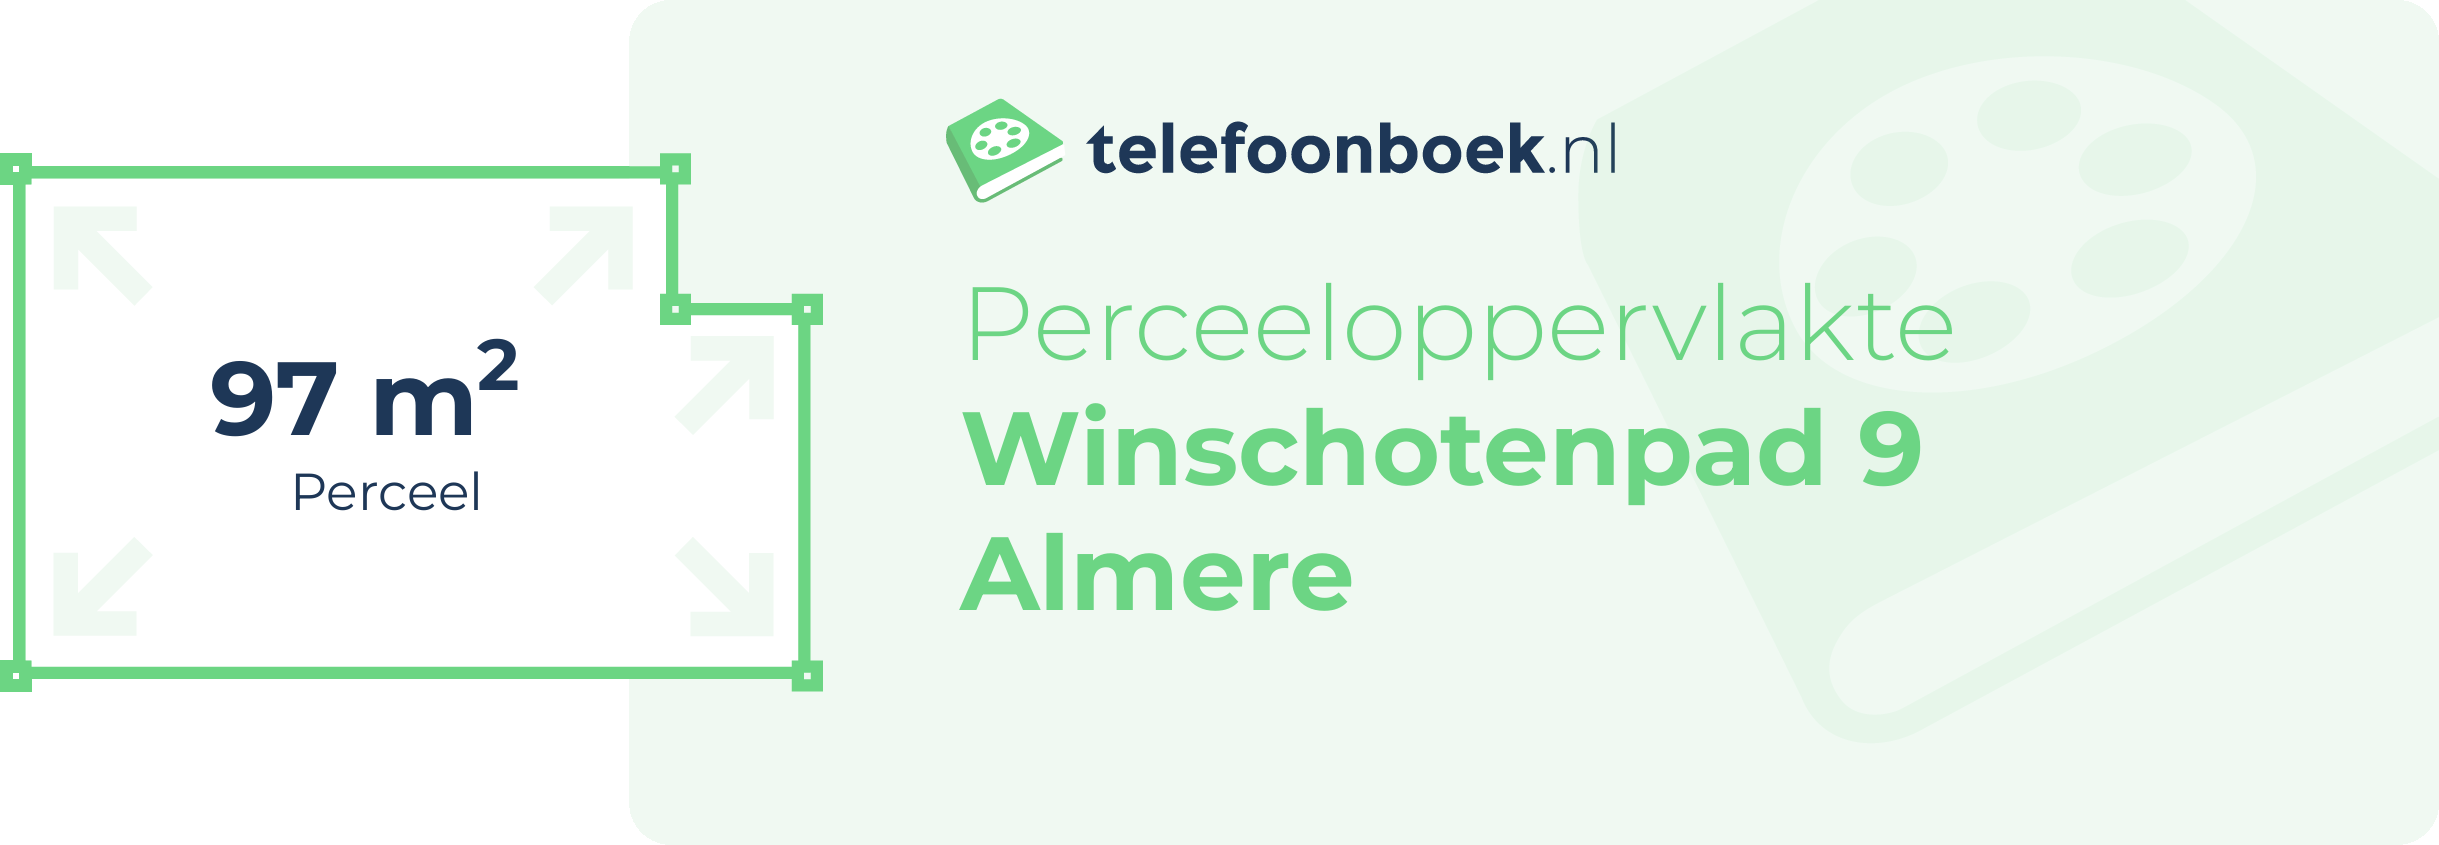 Perceeloppervlakte Winschotenpad 9 Almere